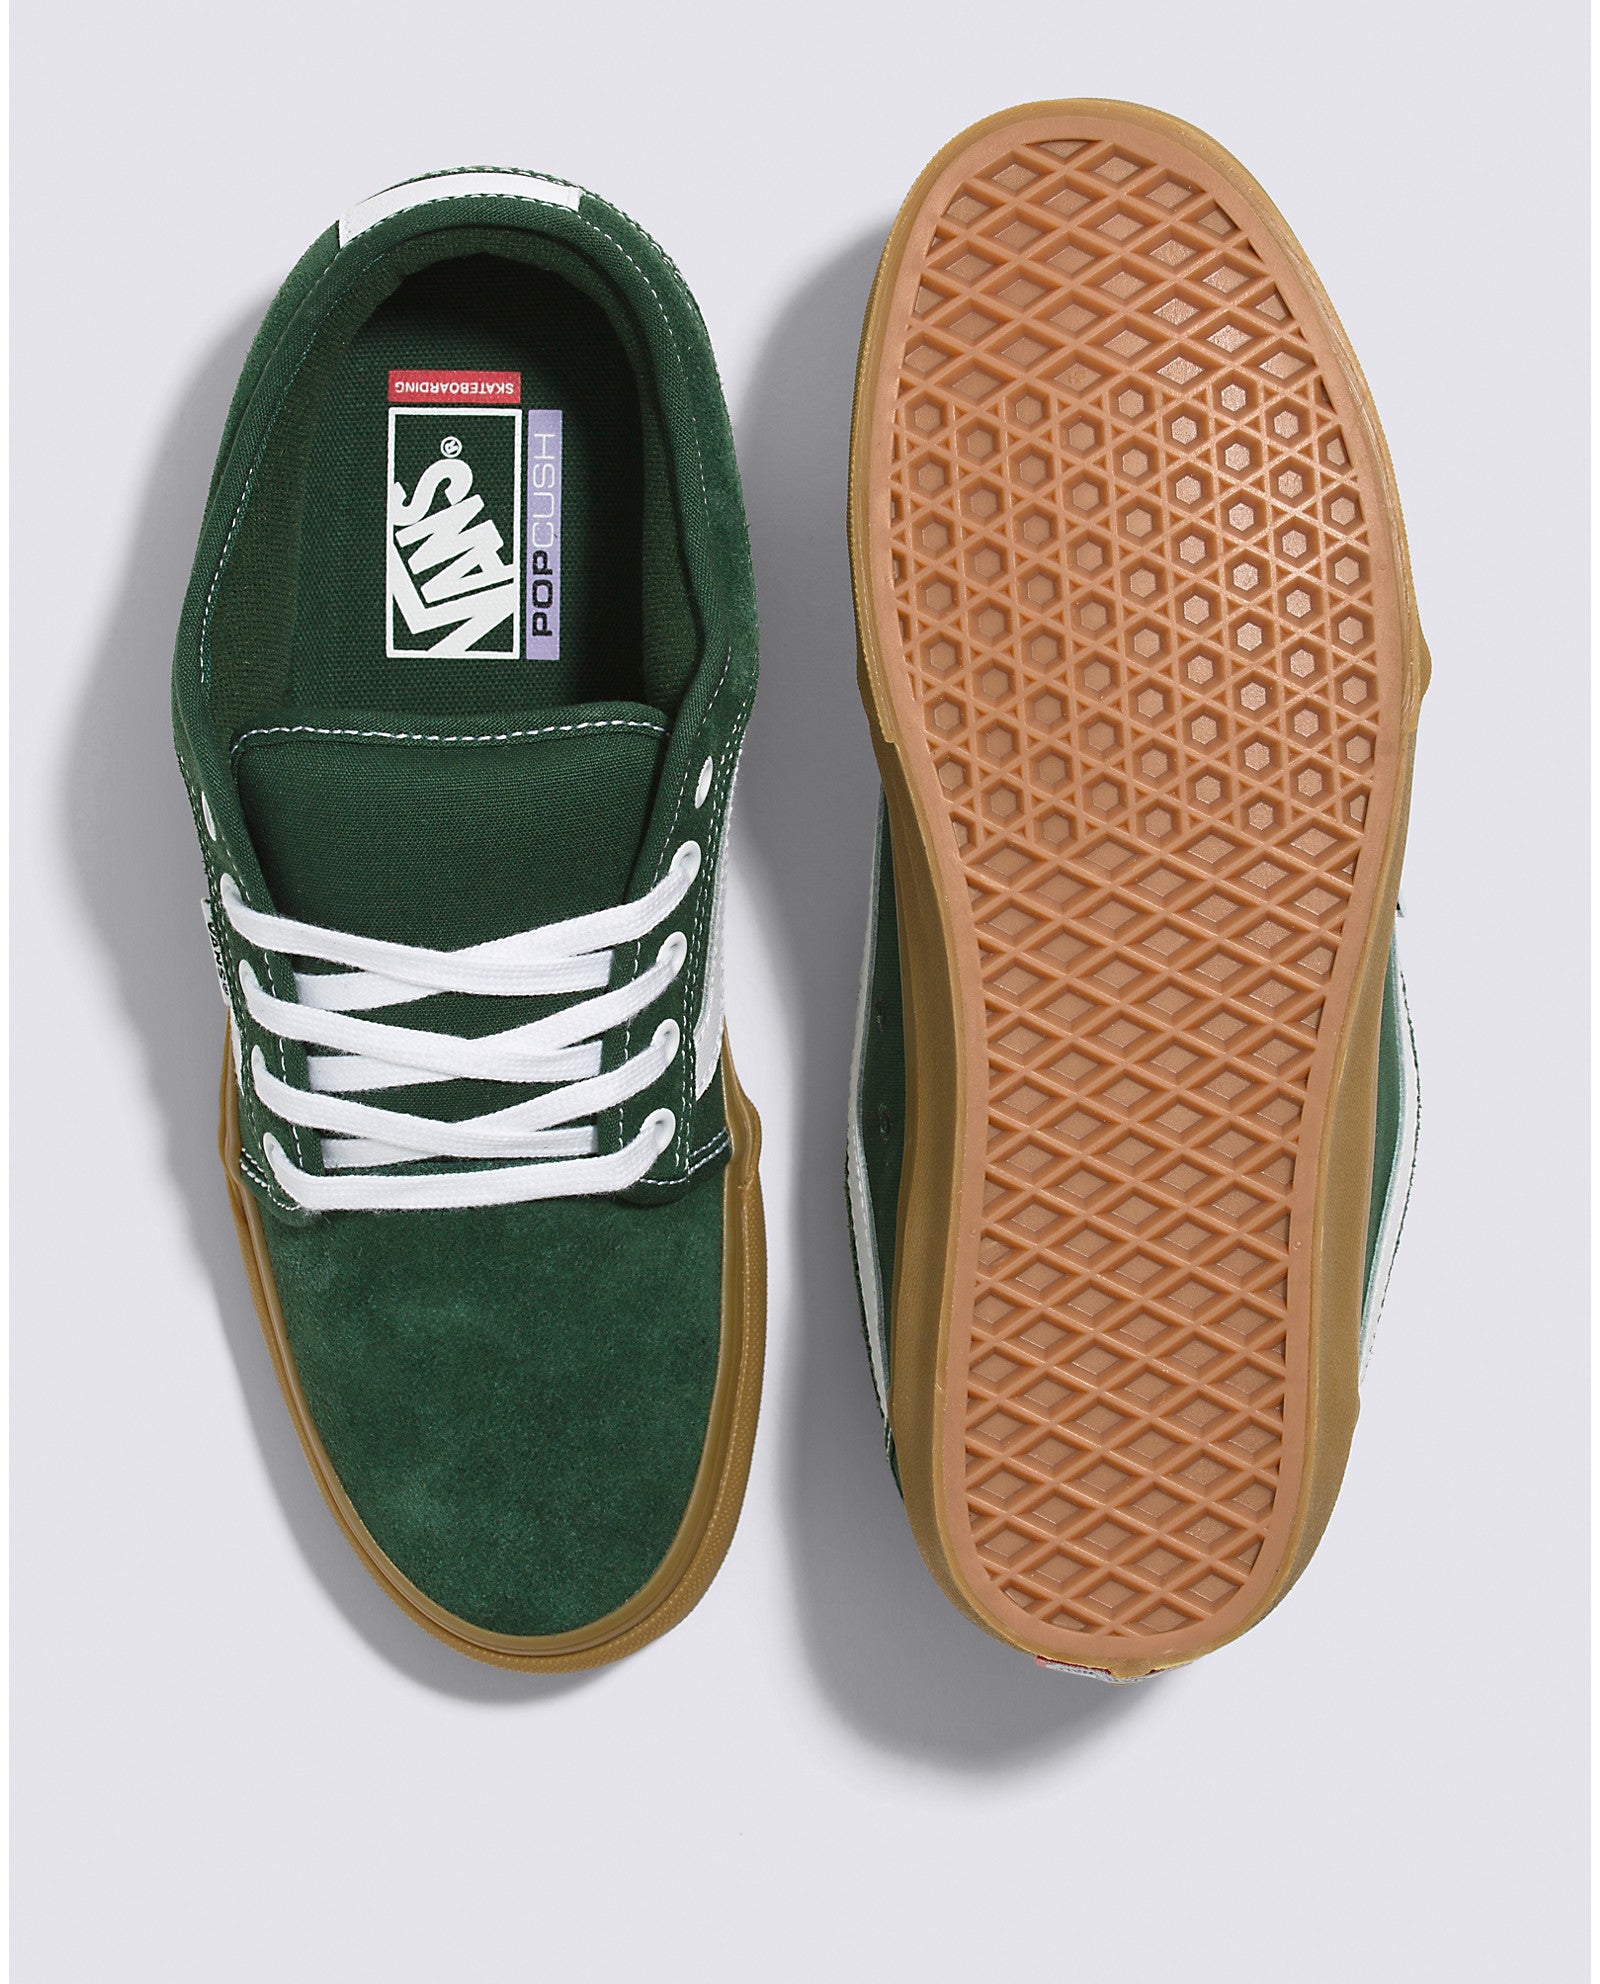 Dark Green/Gum Chukka Low Sidestripe Vans Skate Shoe Top/Bottom